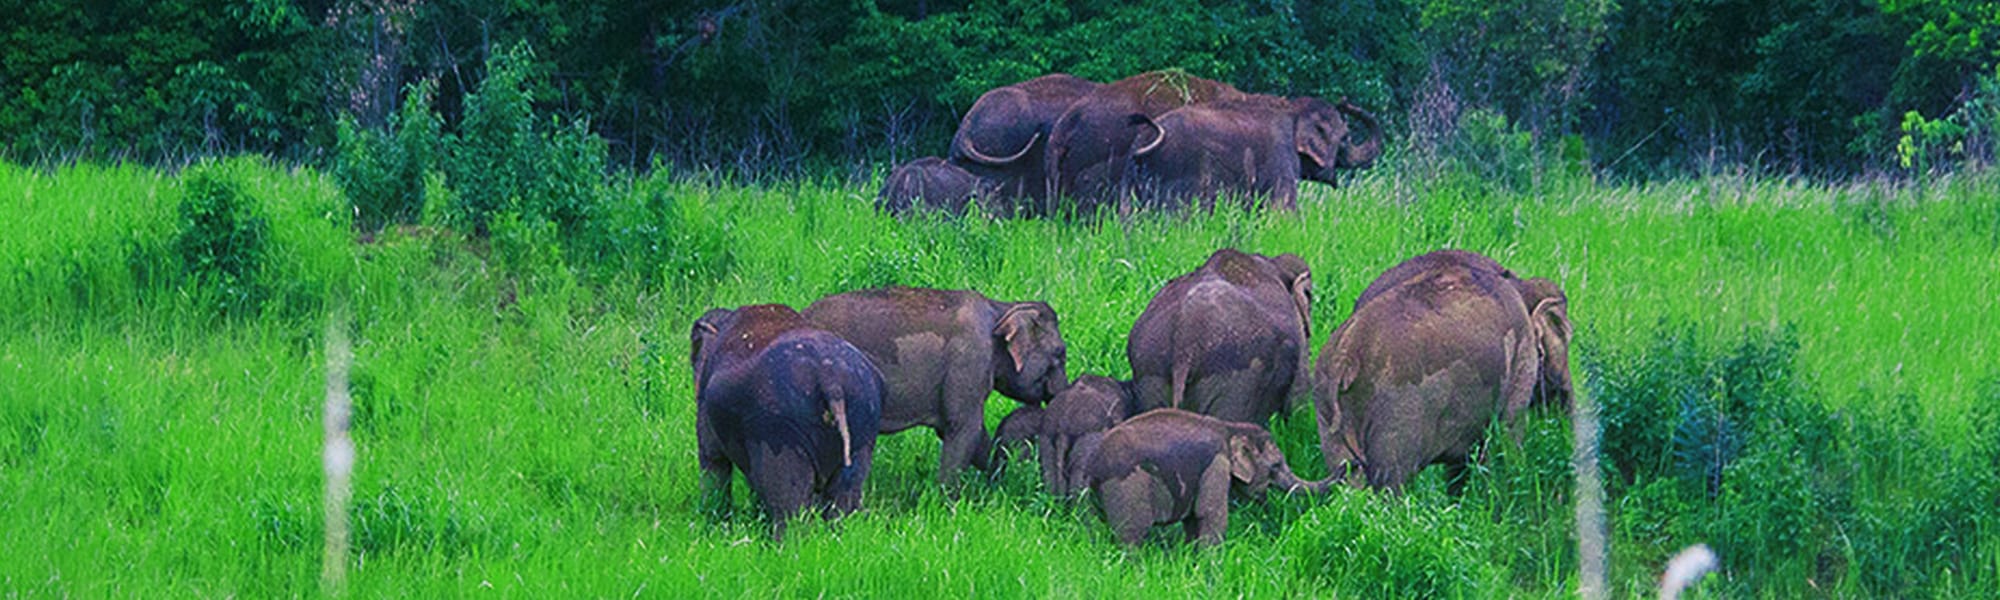 muthanga wildlife safari photos